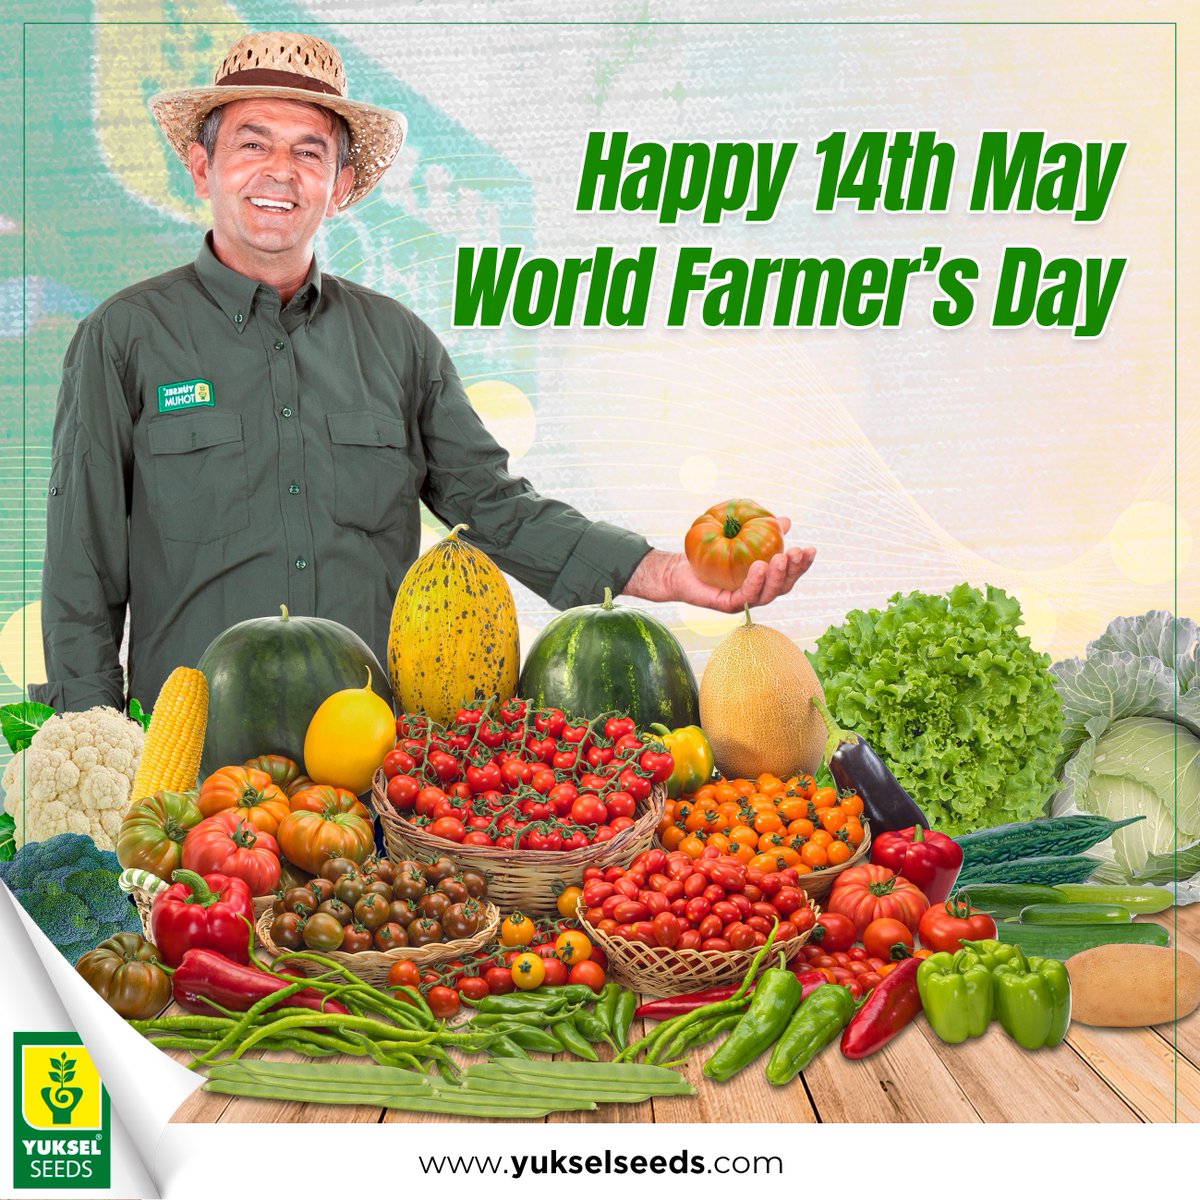 14 Mayıs Dünya Çiftçiler Günü Kutlu Olsun! 🌱🌟
--
Happy 14th May World Farmer's Day! 🌱🌟
#tohum #tohumıslahsanatı #iyitarım #çiftçilergünü #FarmersDay